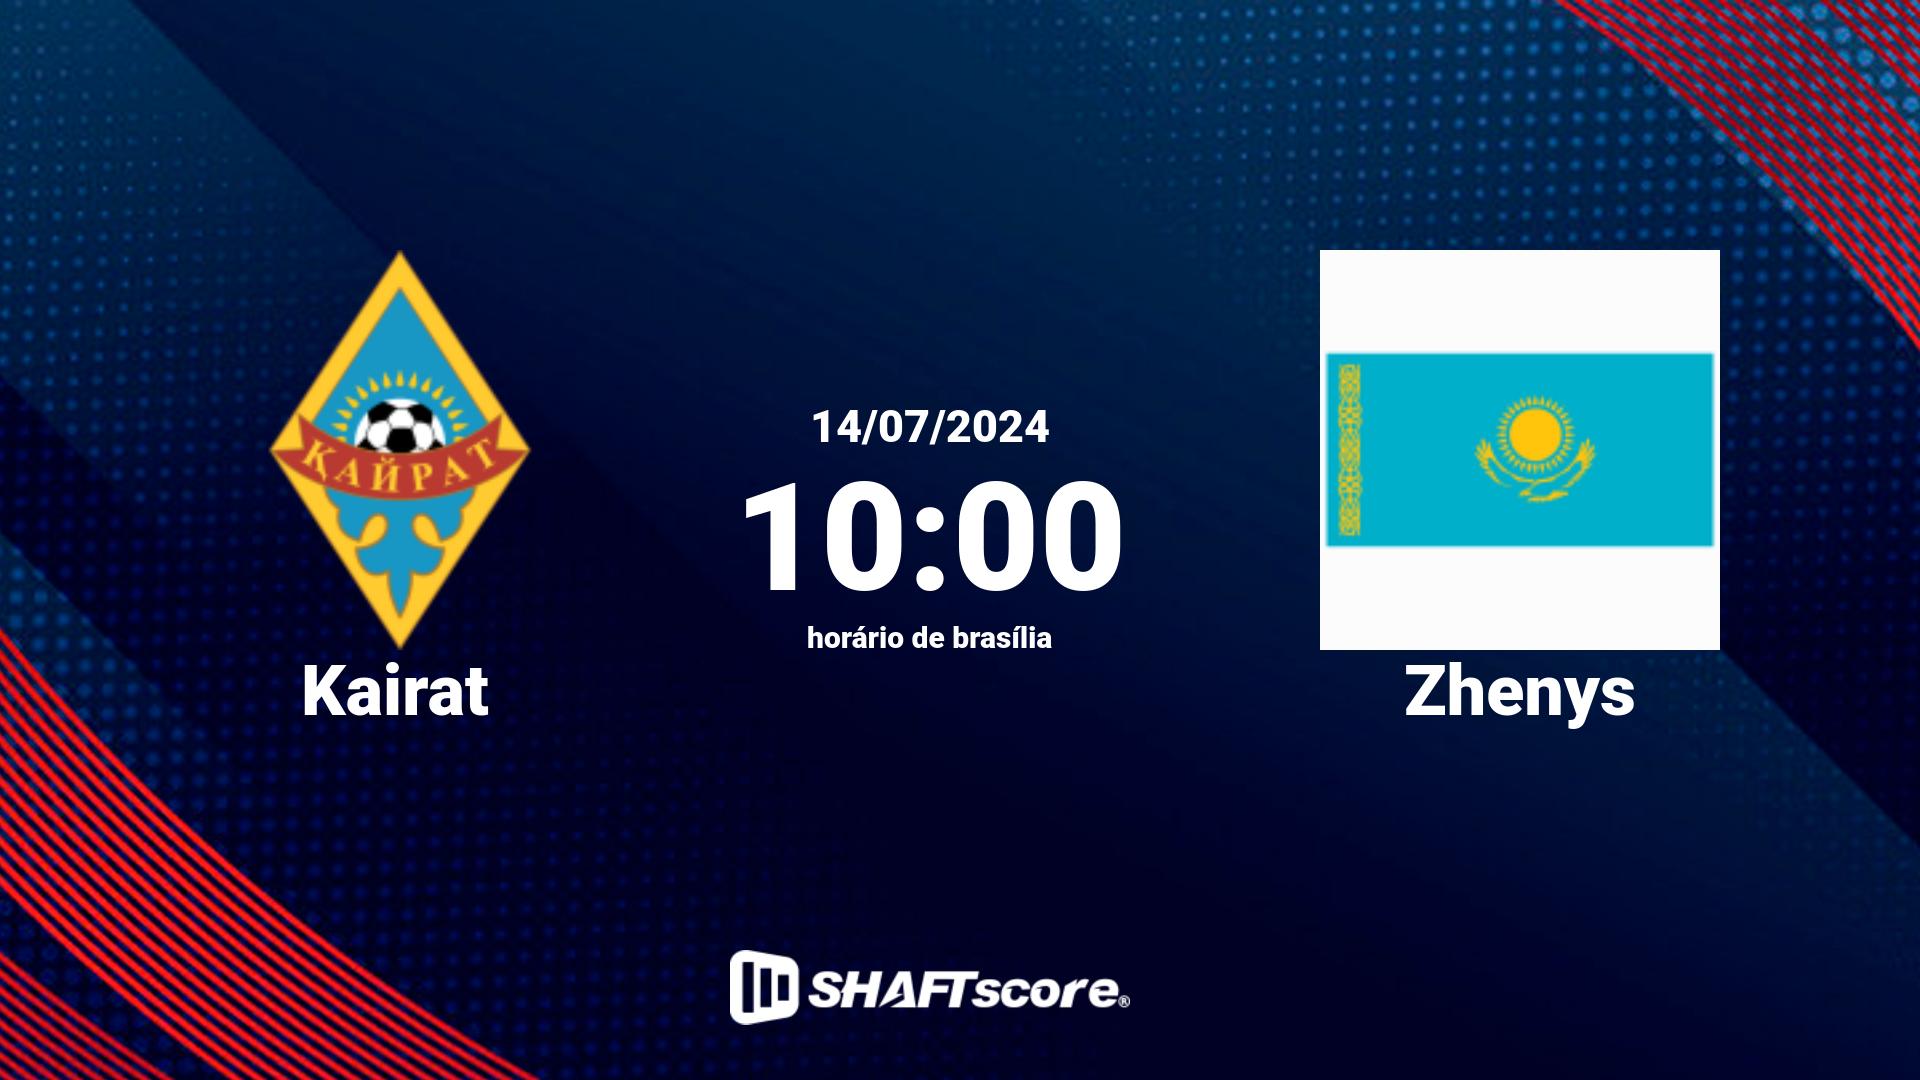 Estatísticas do jogo Kairat vs Zhenys 14.07 10:00